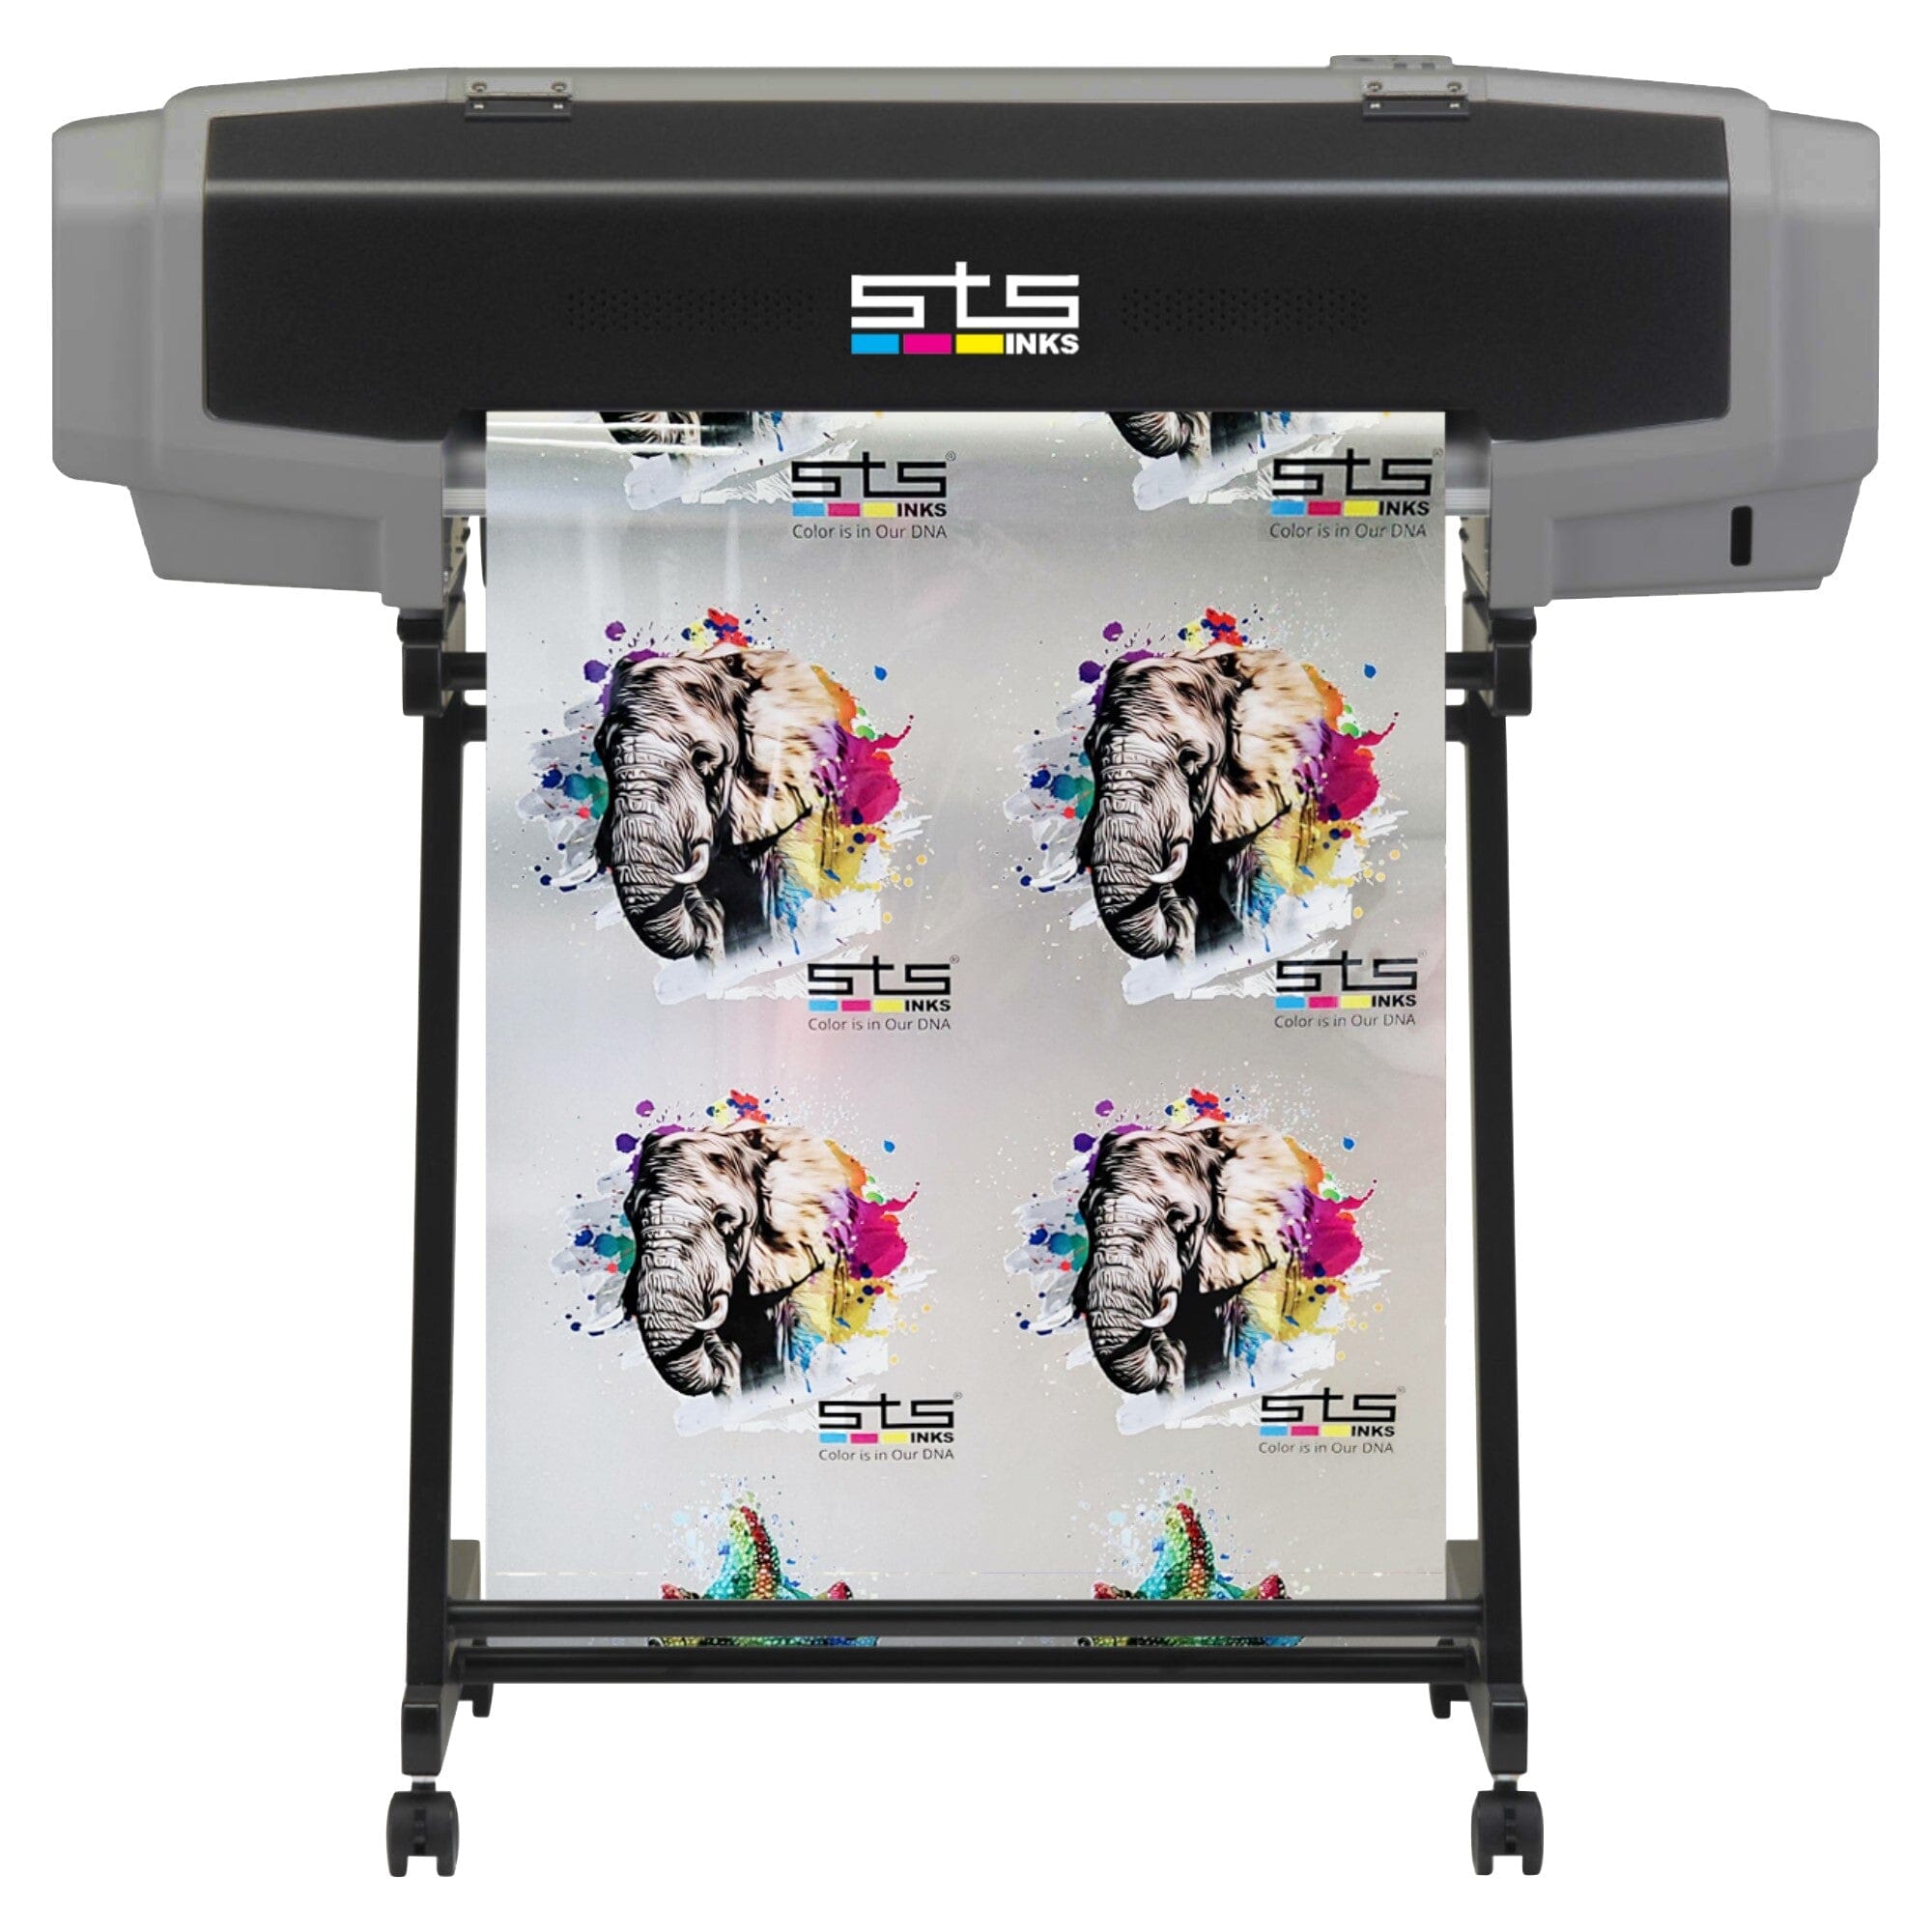 Custom Direct to Film (DTF) Print Service – 50x75cm Printed